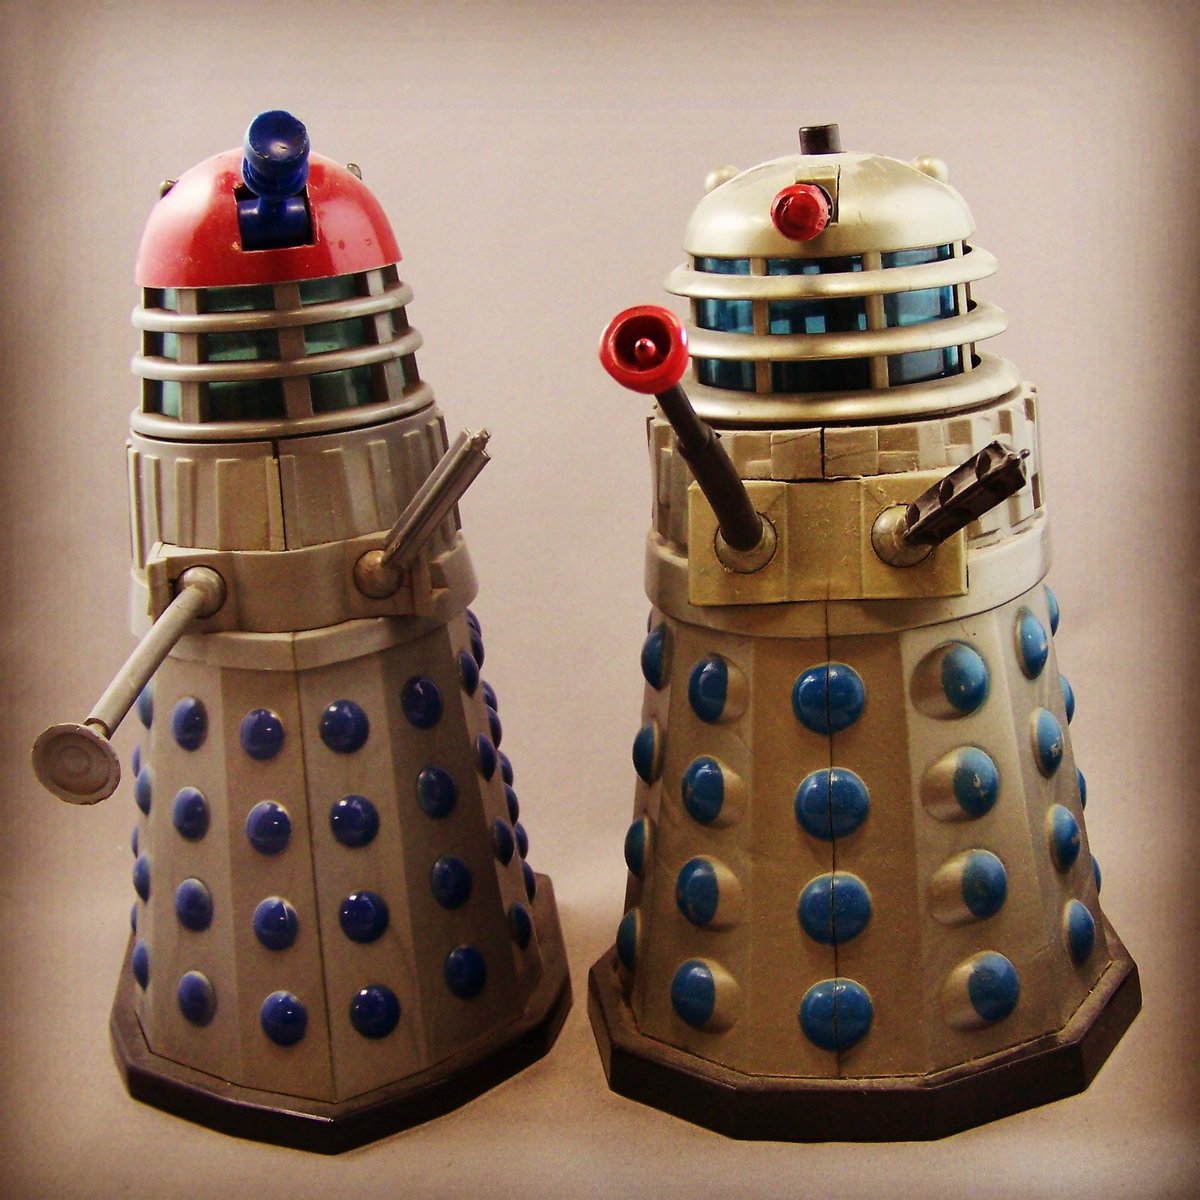 Daleks! Denys Fisher and Palitoy.
#daleks #doctorwho #palitoy #denysfisher #exterminate #70stv #70stoys #plaidstallions #uktoys